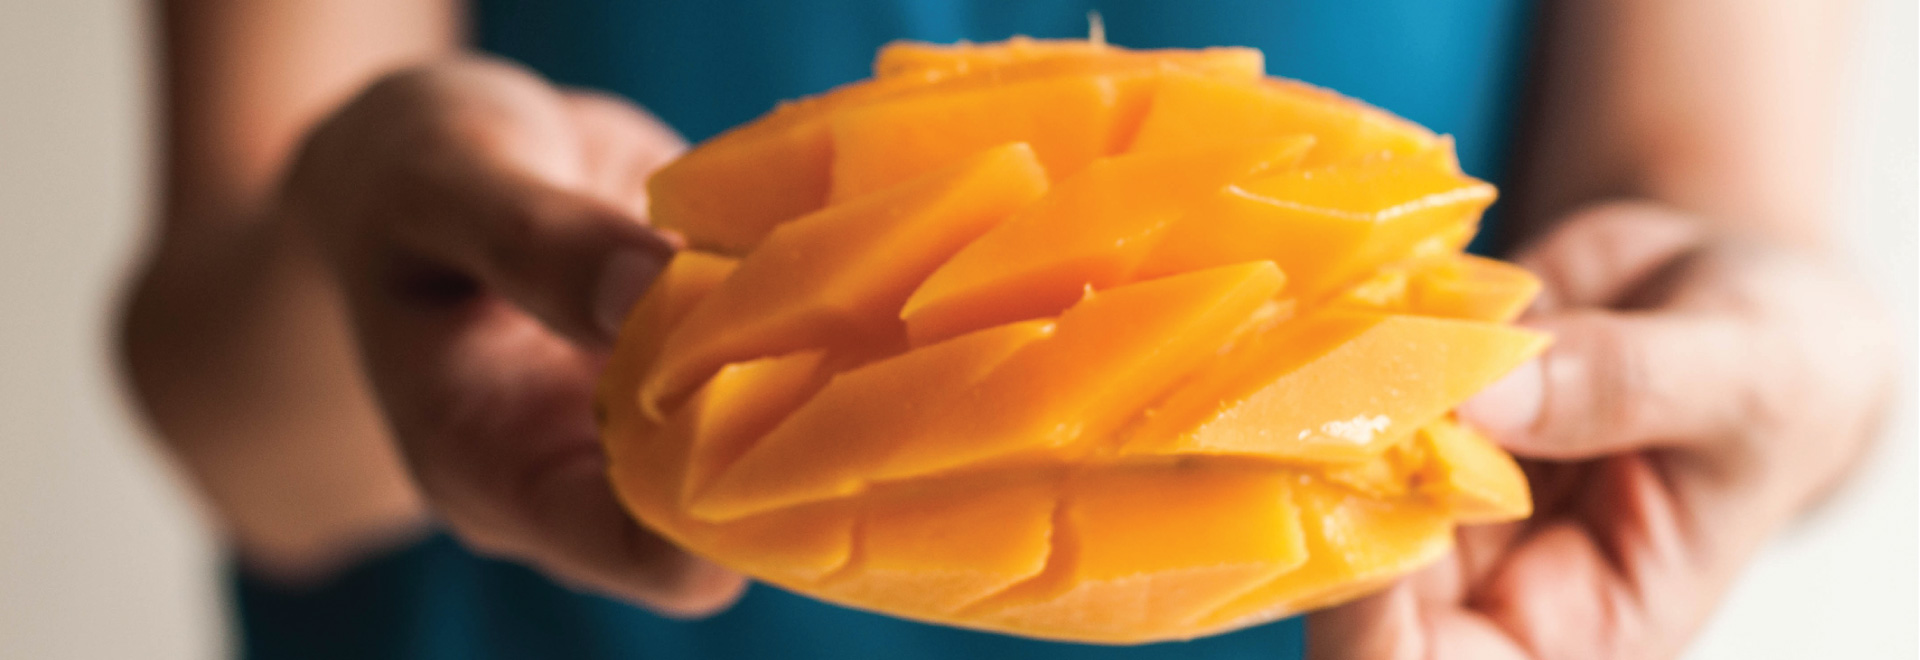 mango-allergy-causes-symptoms-treatment-prevention-tips